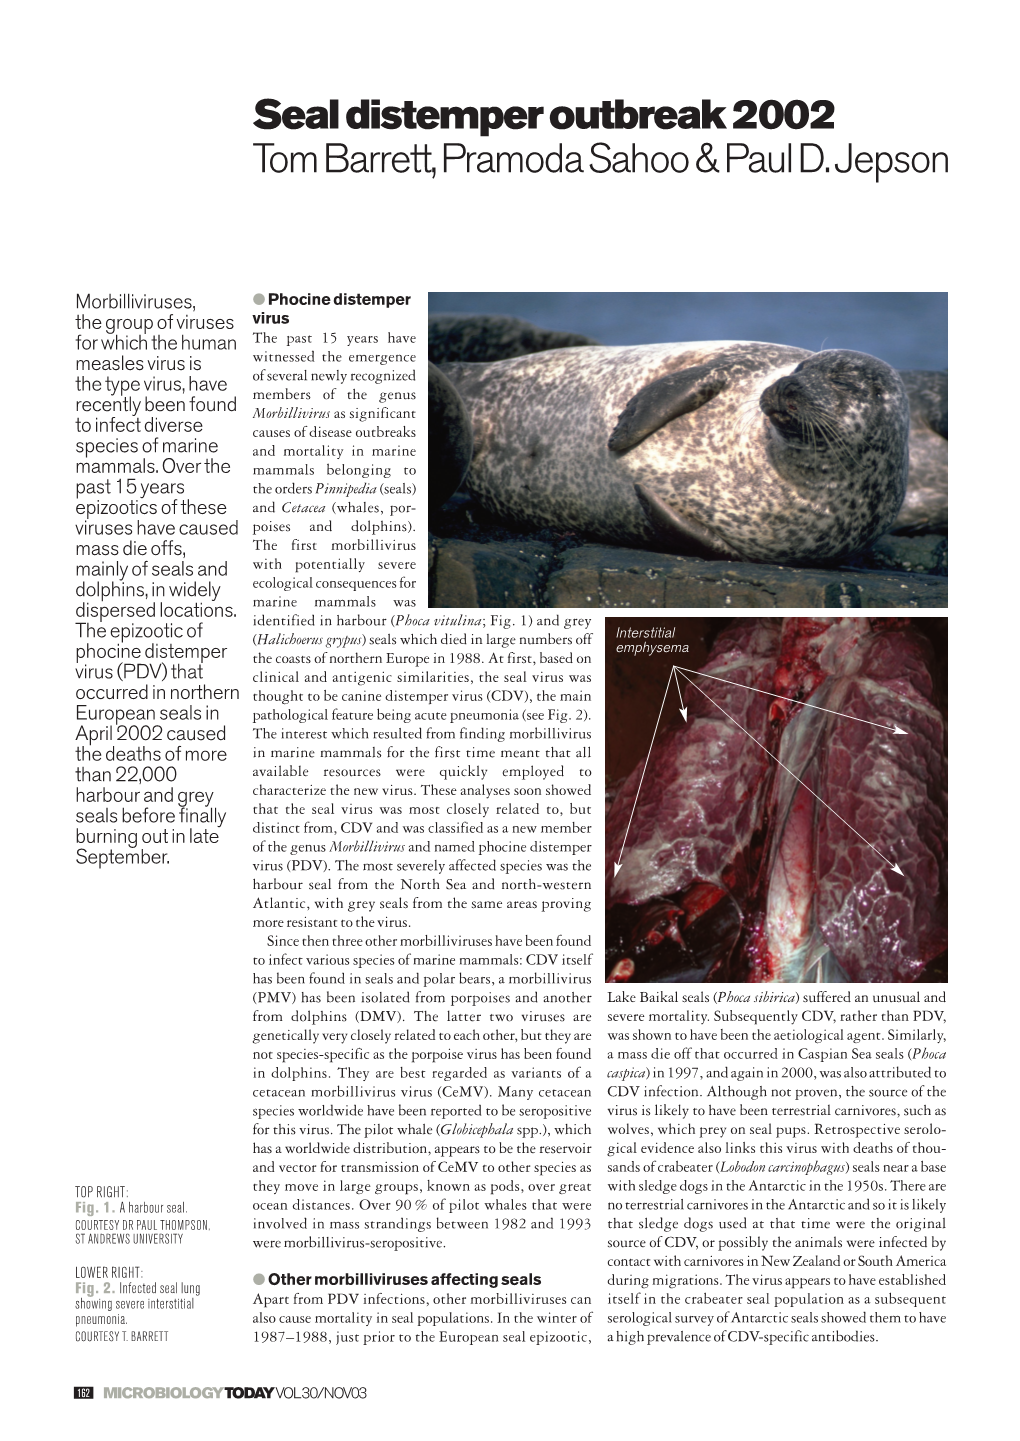 Seal Distemper Outbreak 2002 Tom Barrett, Pramoda Sahoo & Paul D. Jepson